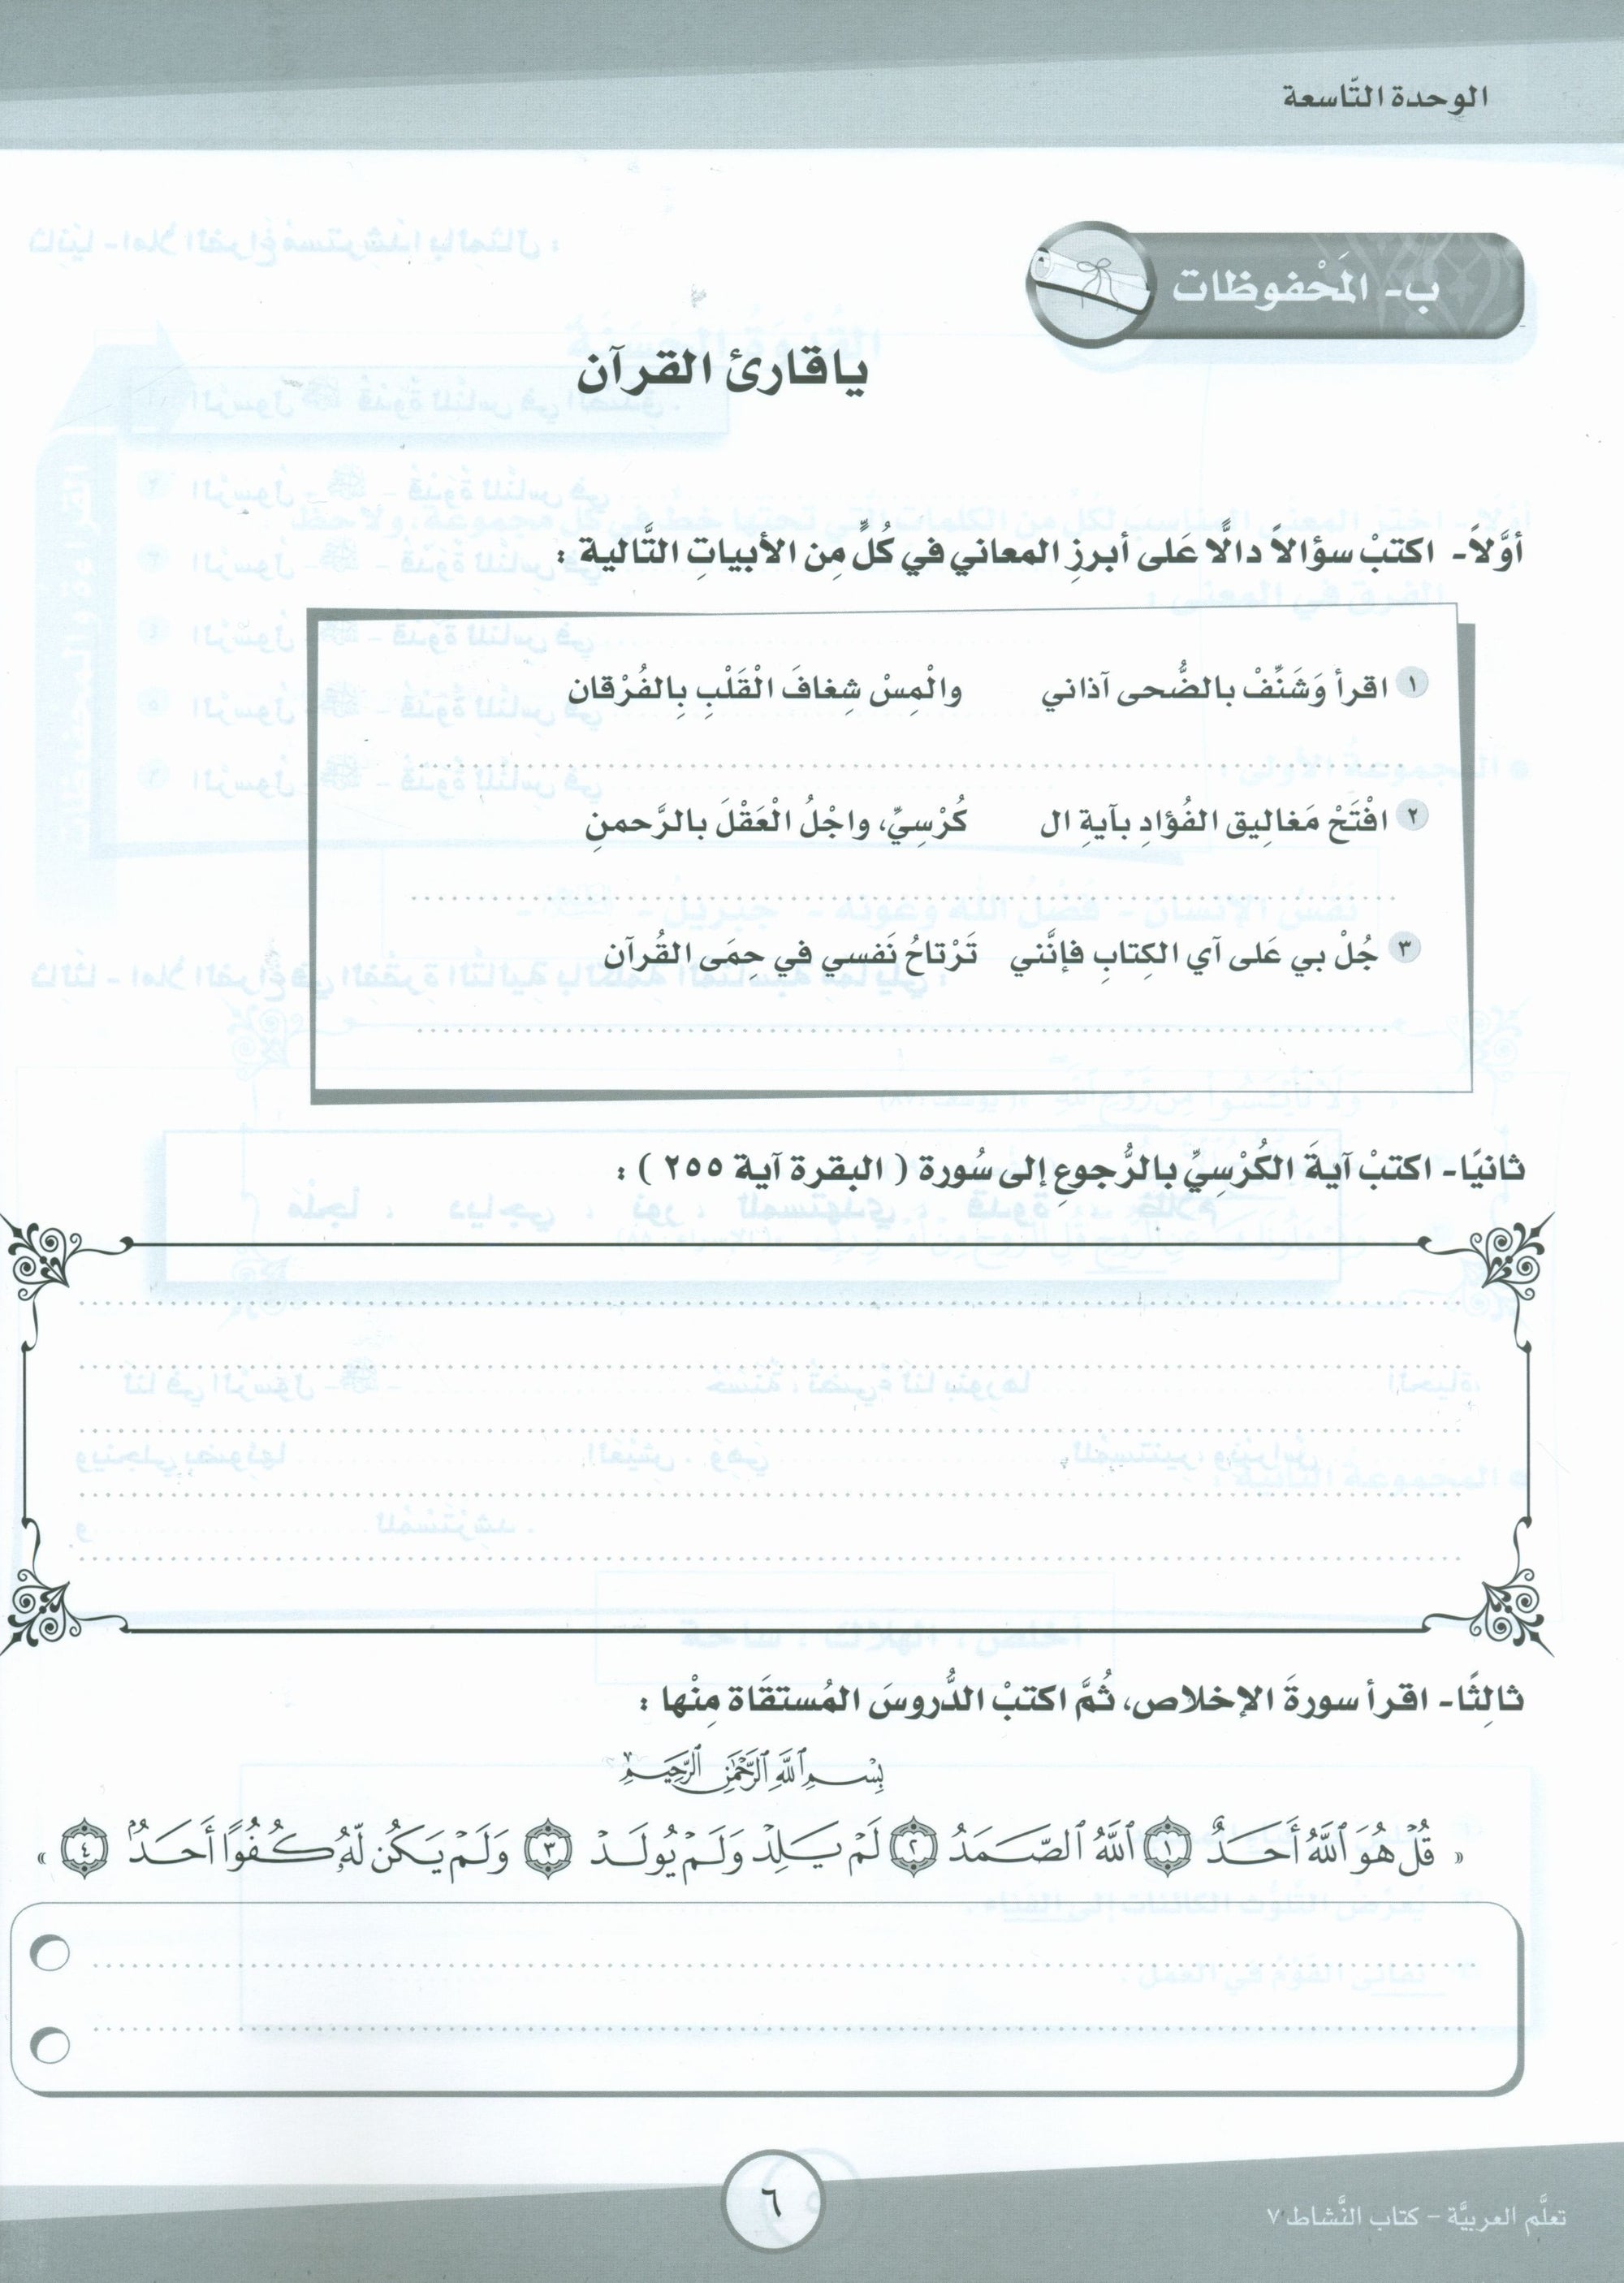 ICO Learn Arabic Workbook Level 7 Part 2 تعلم العربية كتاب التدريبات